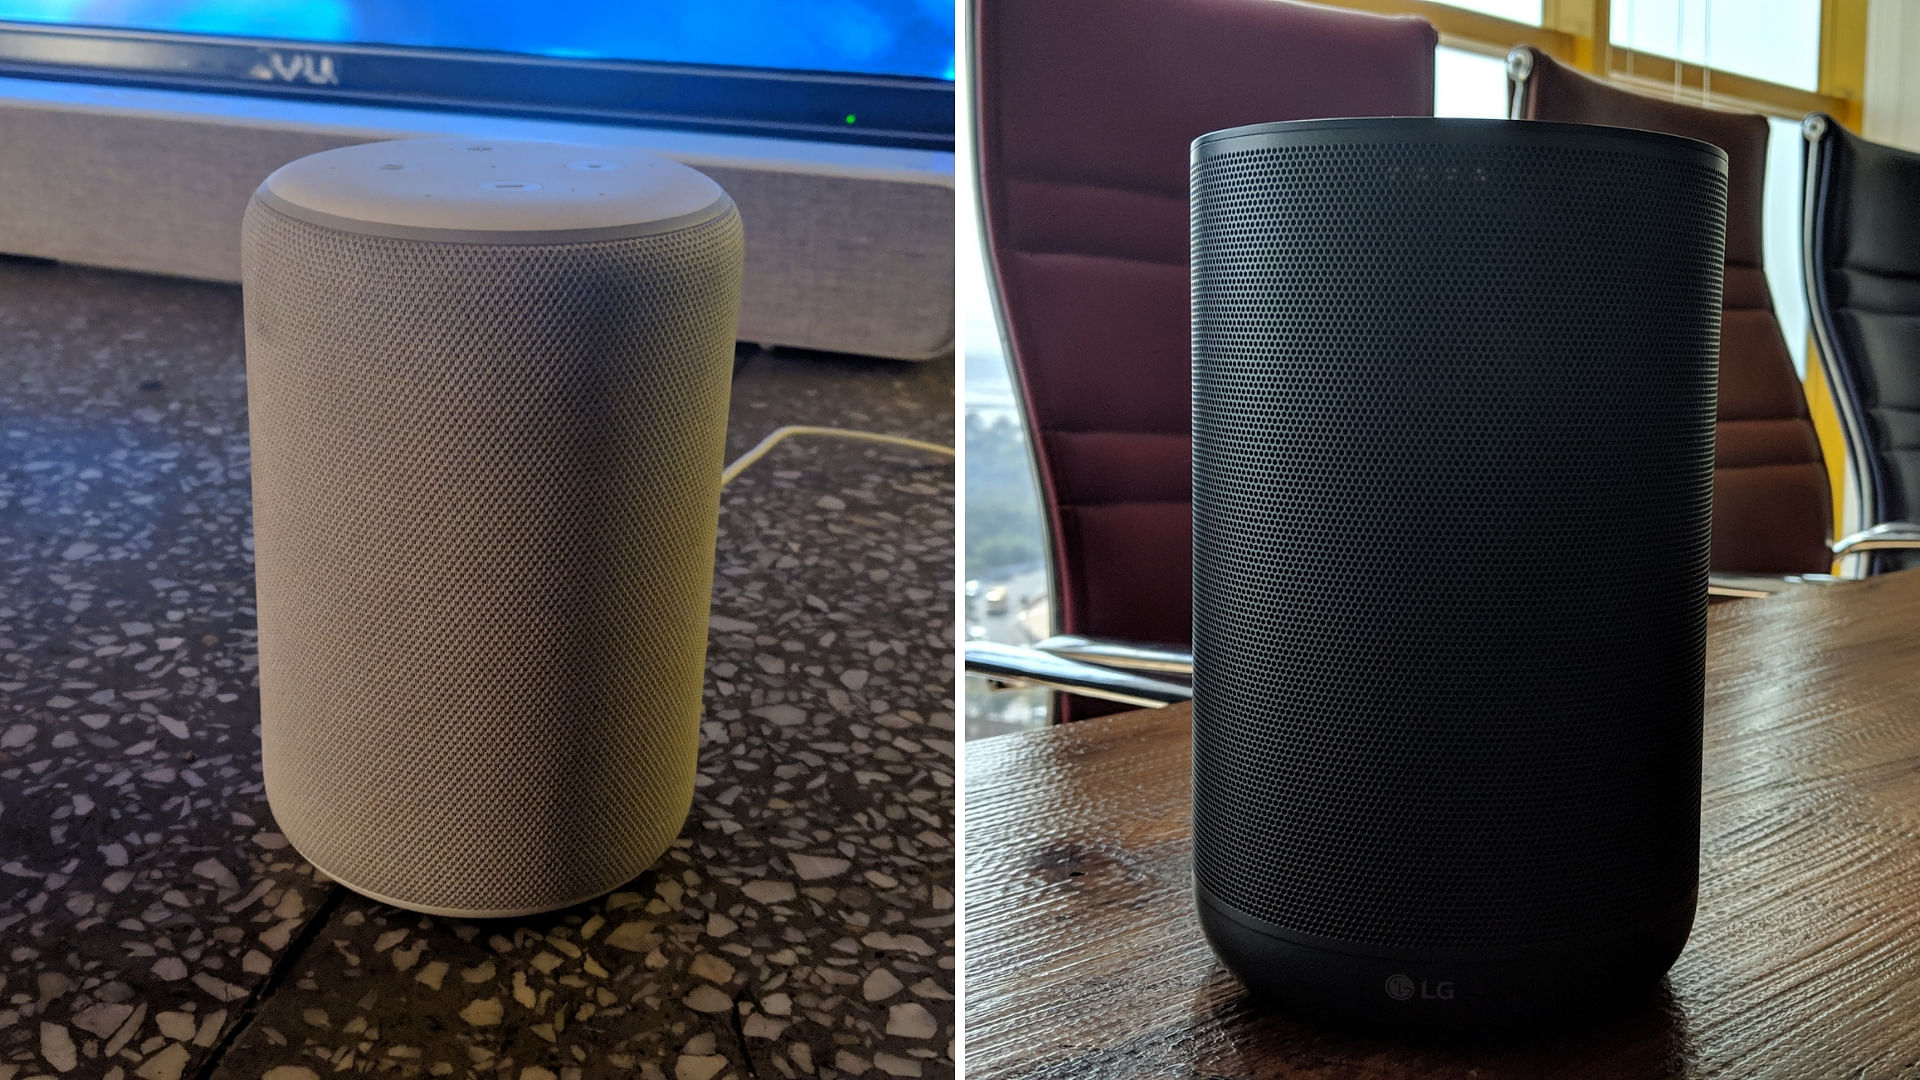 Amazon Echo Plus 2019 (left) vs the LG ThinQ (right)